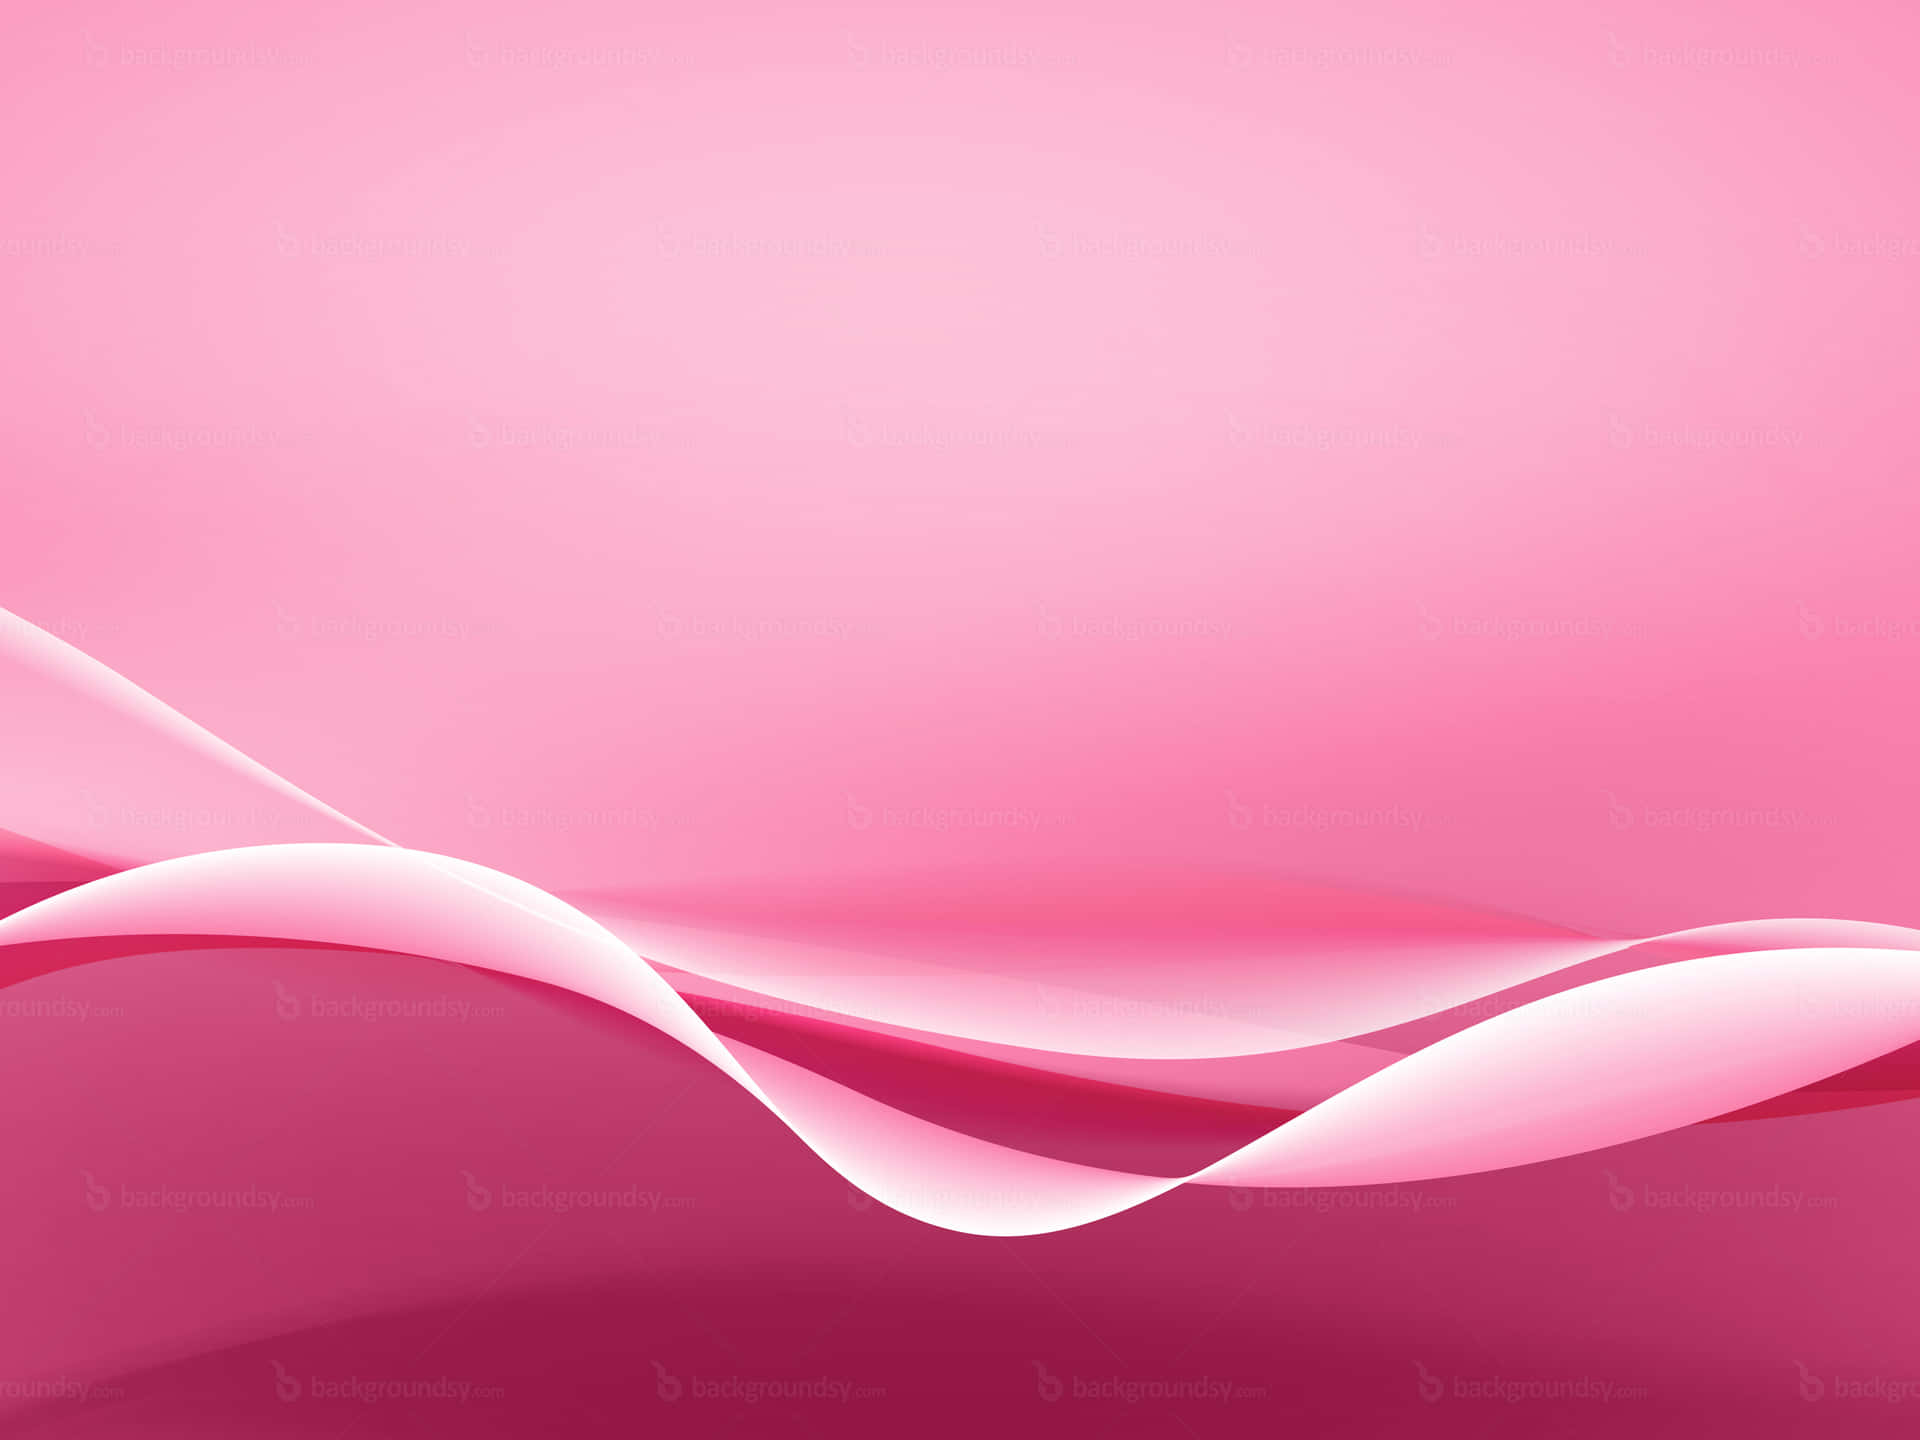 A beautiful swirl of pink and white